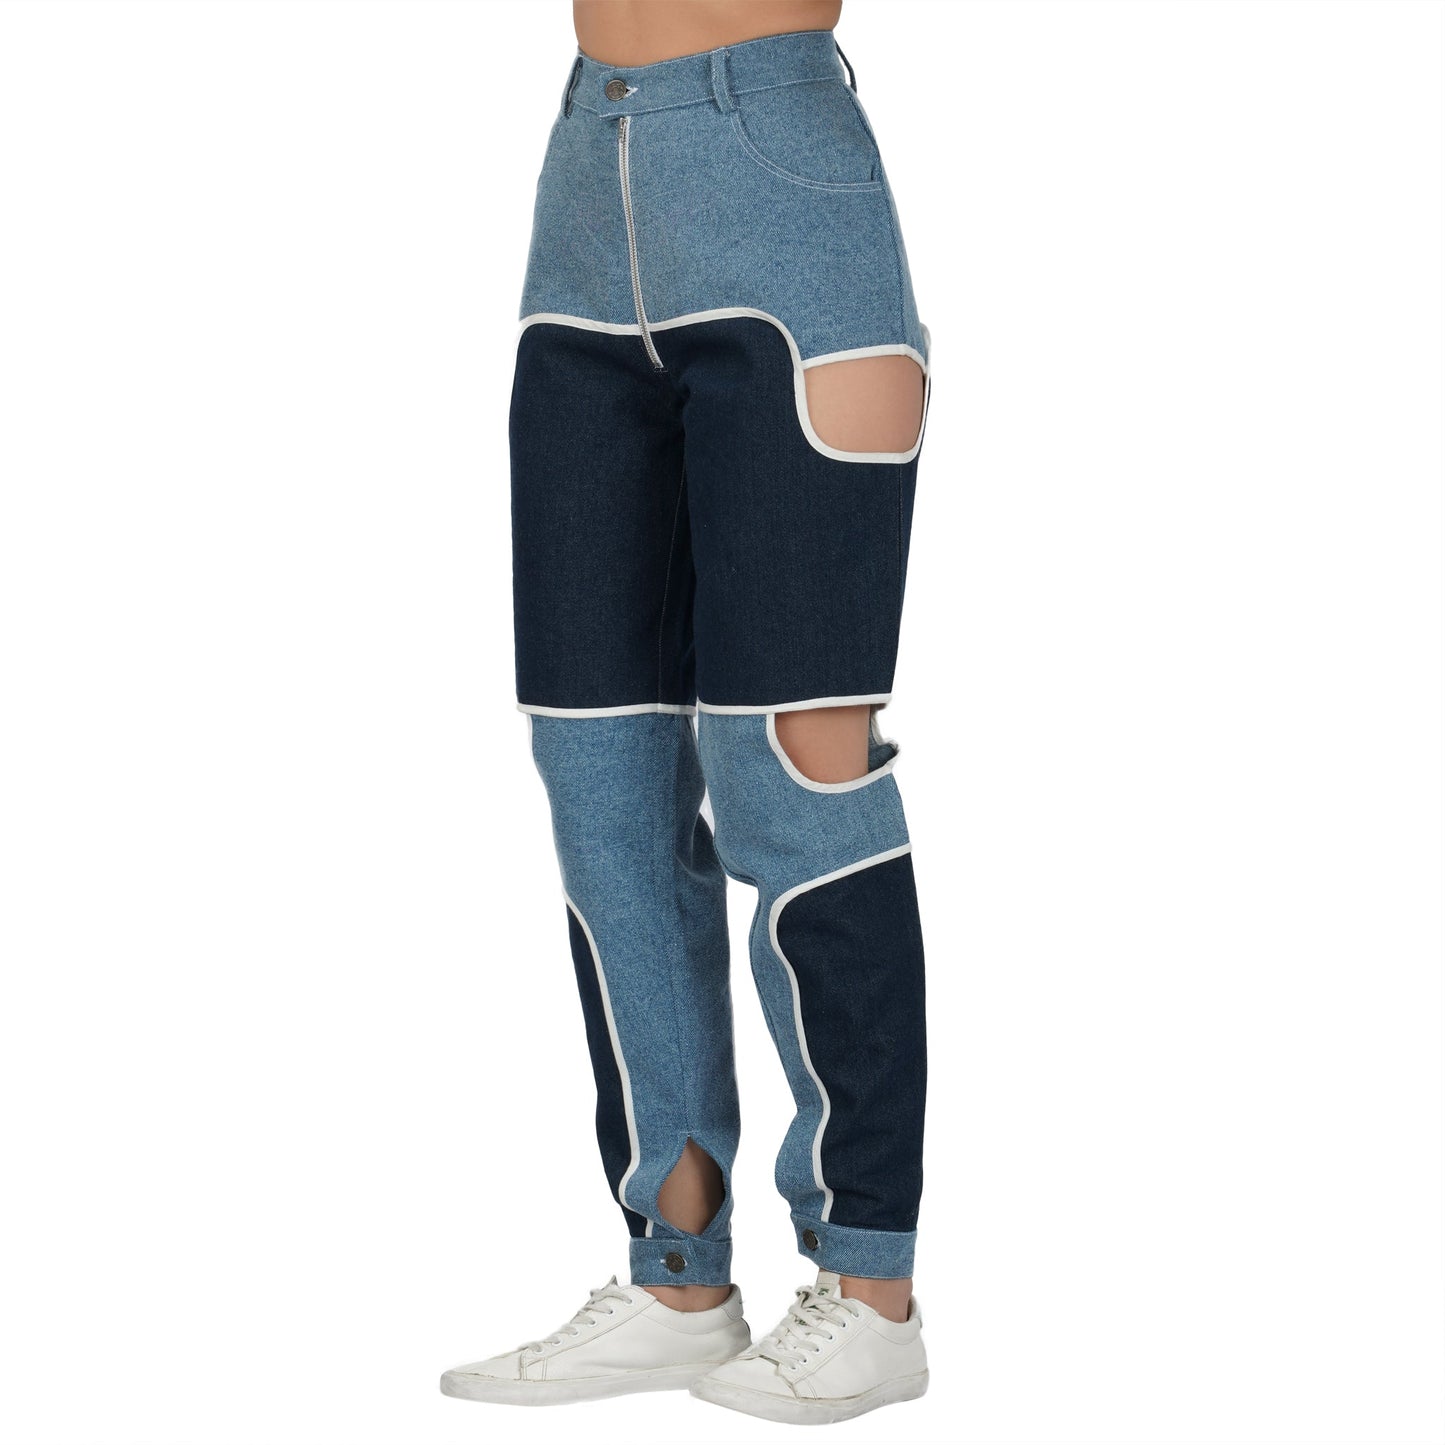 SLAY. Women's Blue & White Colorblock Denim Jeans & Crop Top Co-ord Set